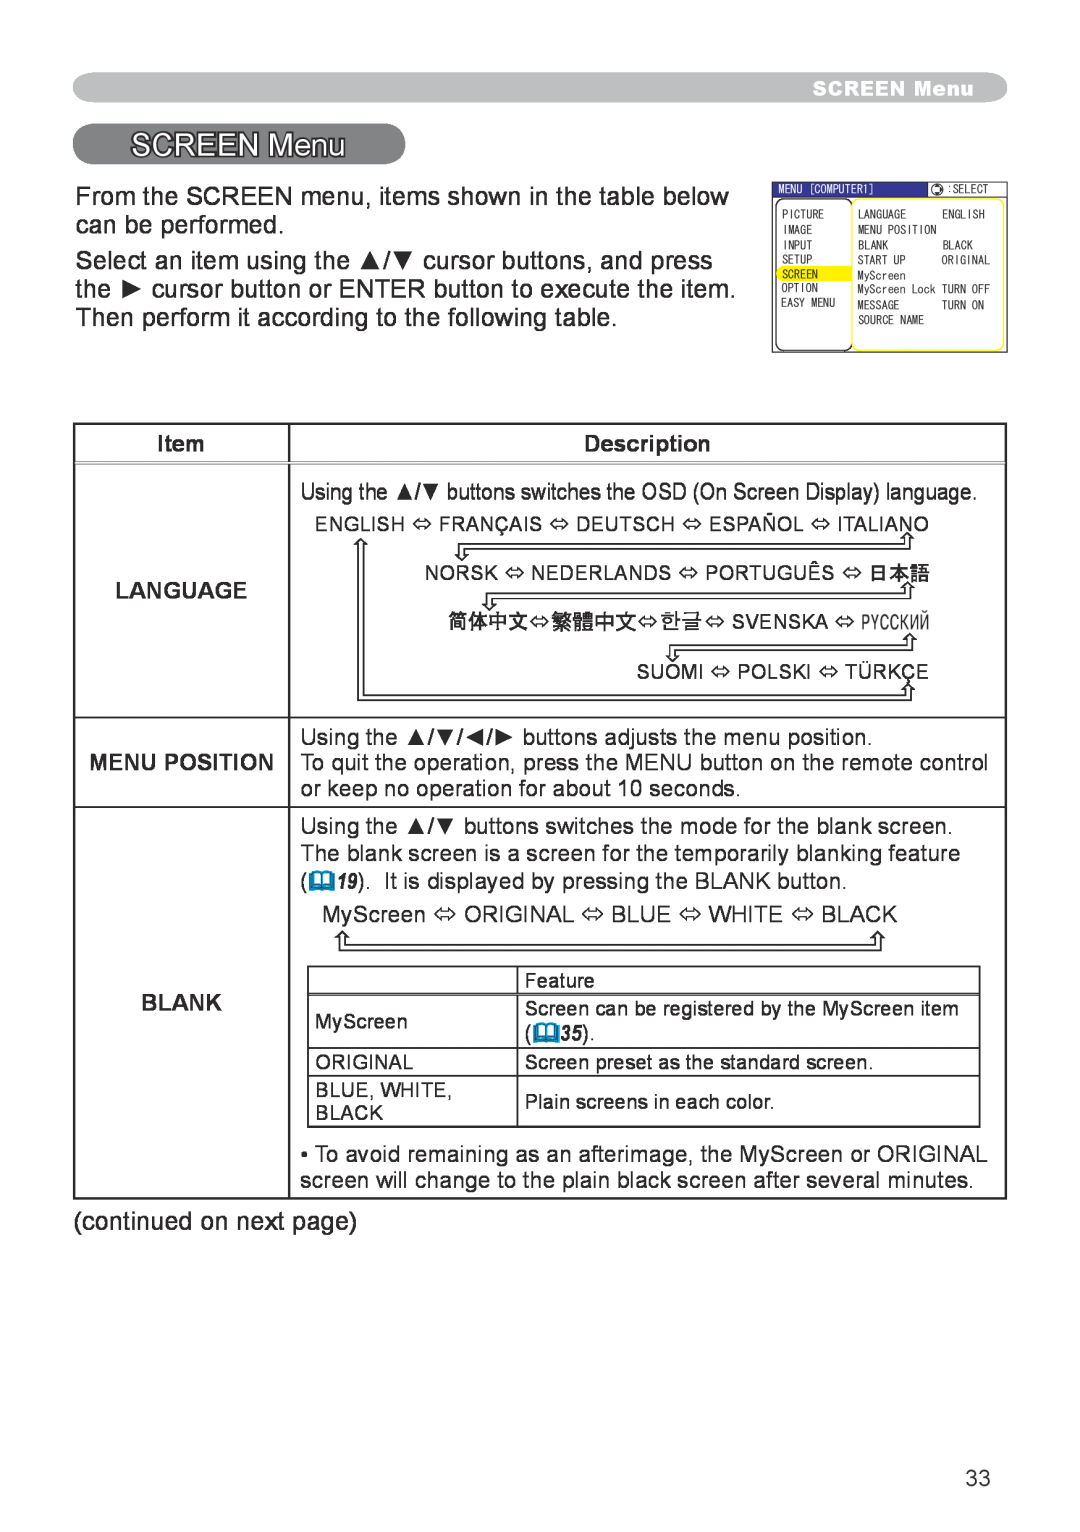 3M X20 manual SCREEN Menu, Description, Language, Blank 